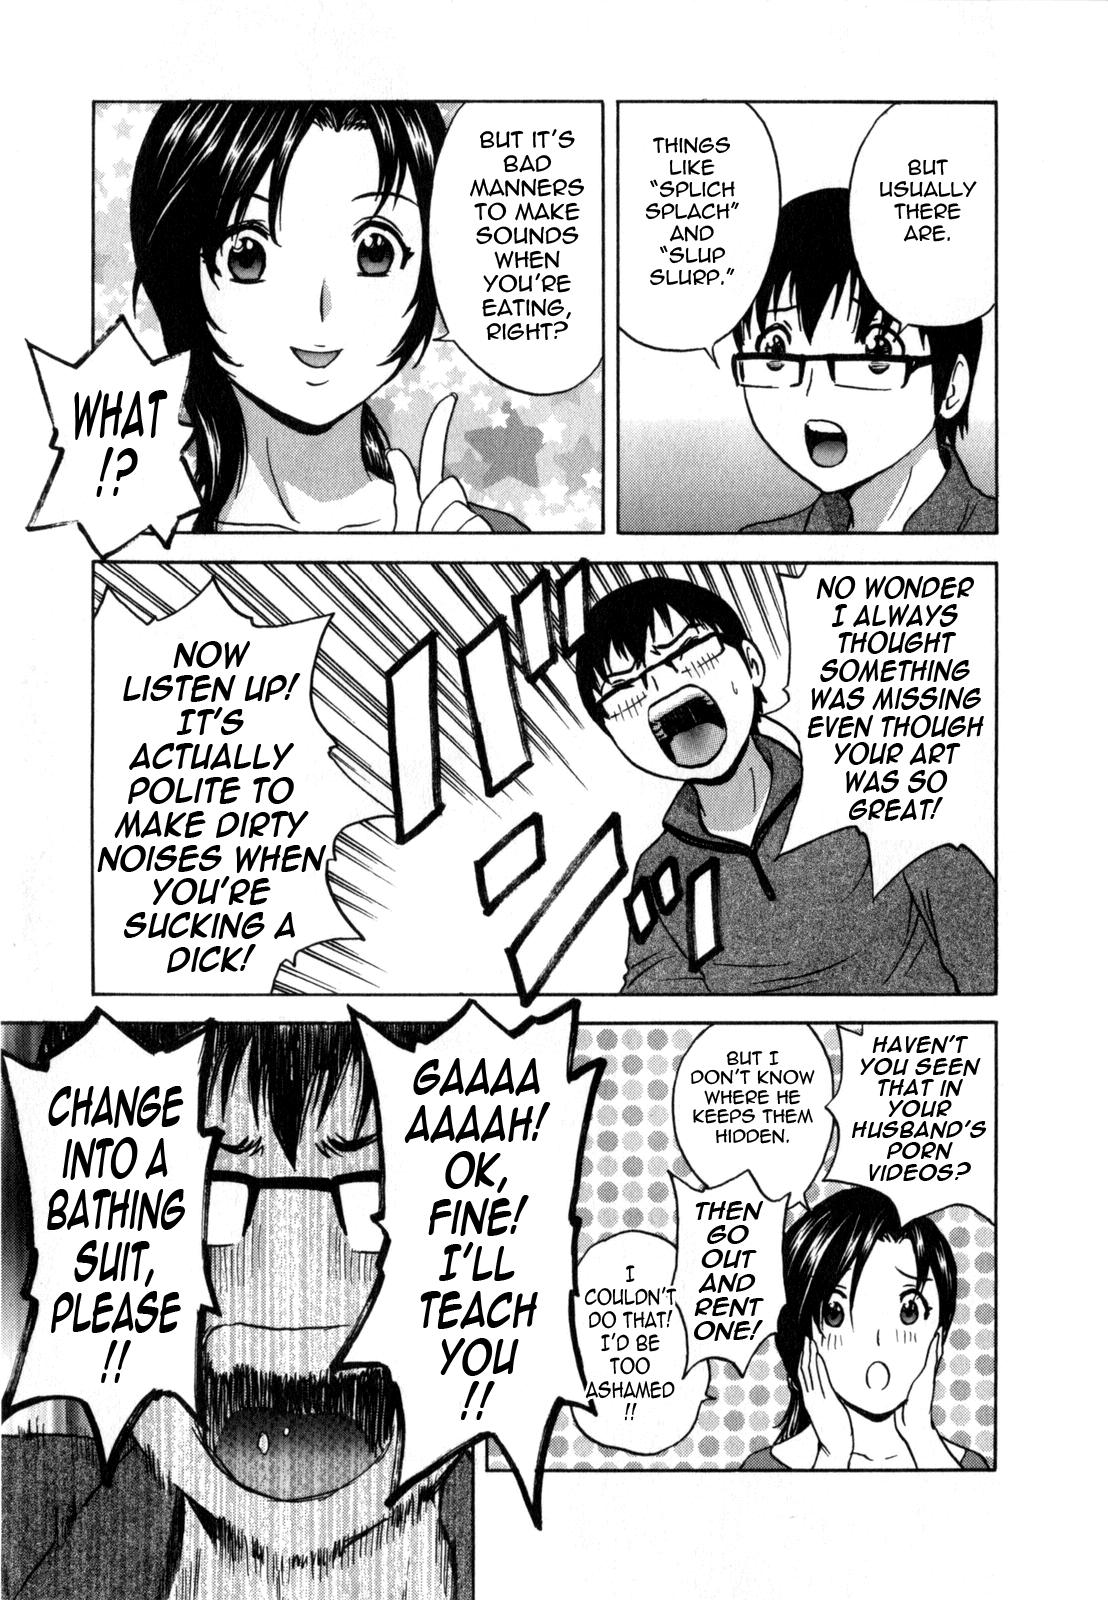 [Hidemaru] Life with Married Women Just Like a Manga 1 - Ch. 1-8 [English] {Tadanohito} 15